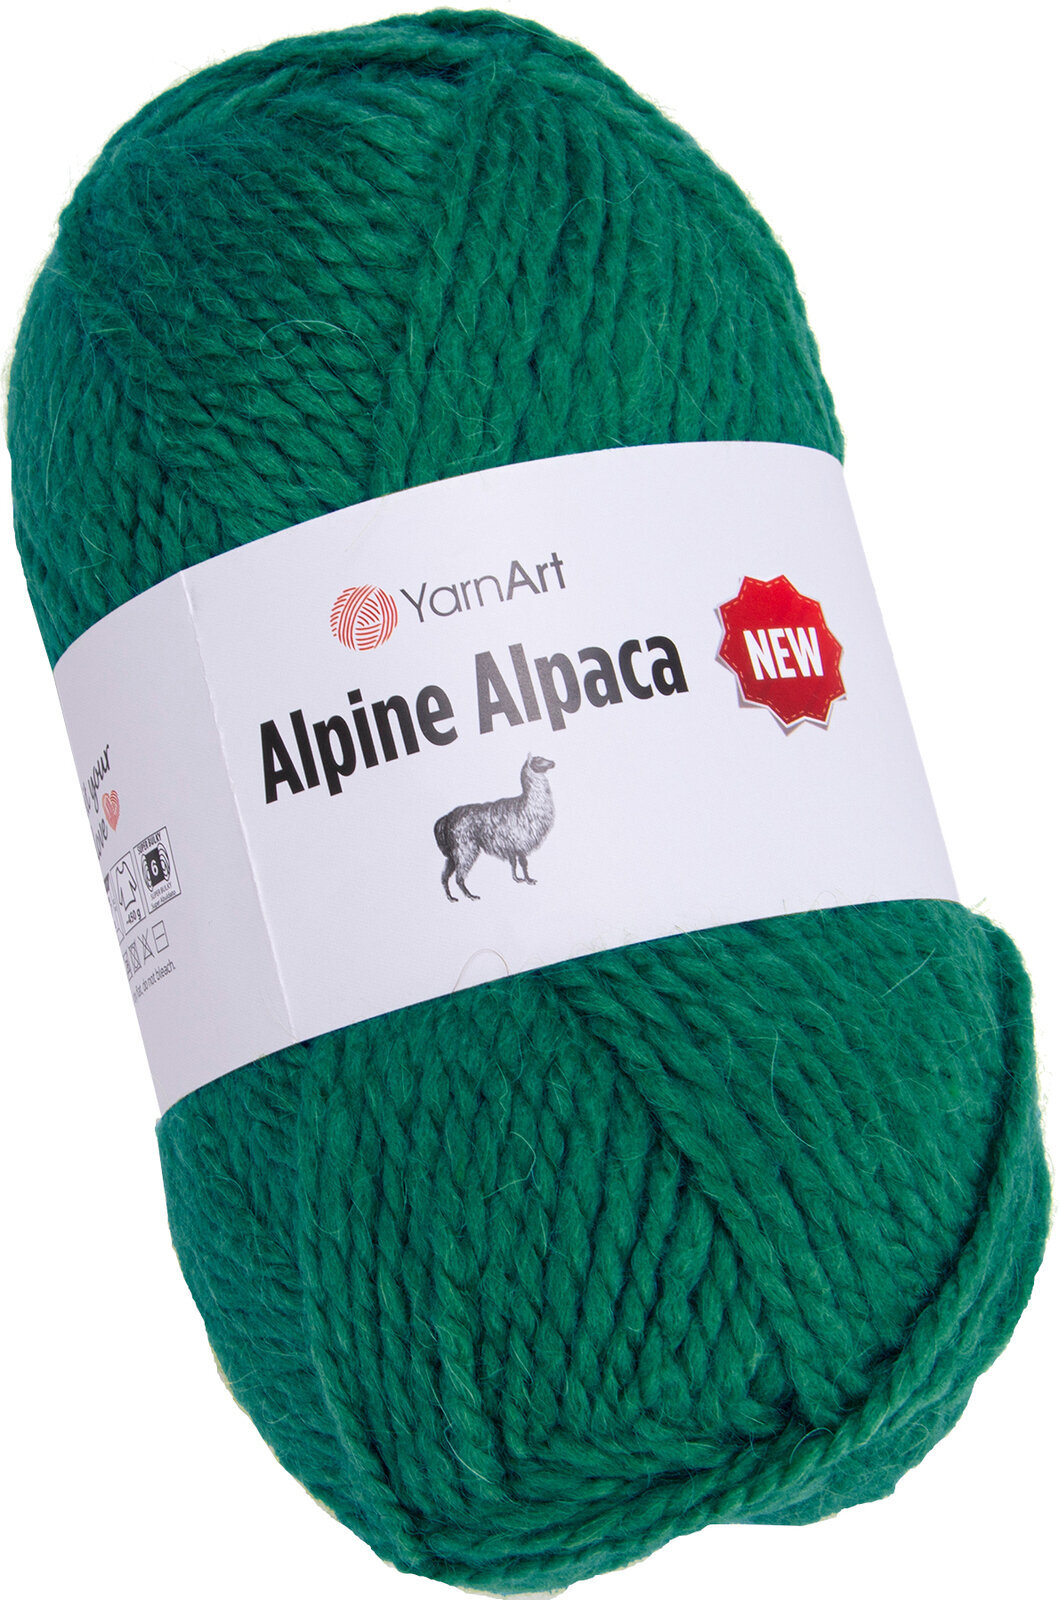 Strickgarn Yarn Art Alpine Alpaca New 1449 Strickgarn